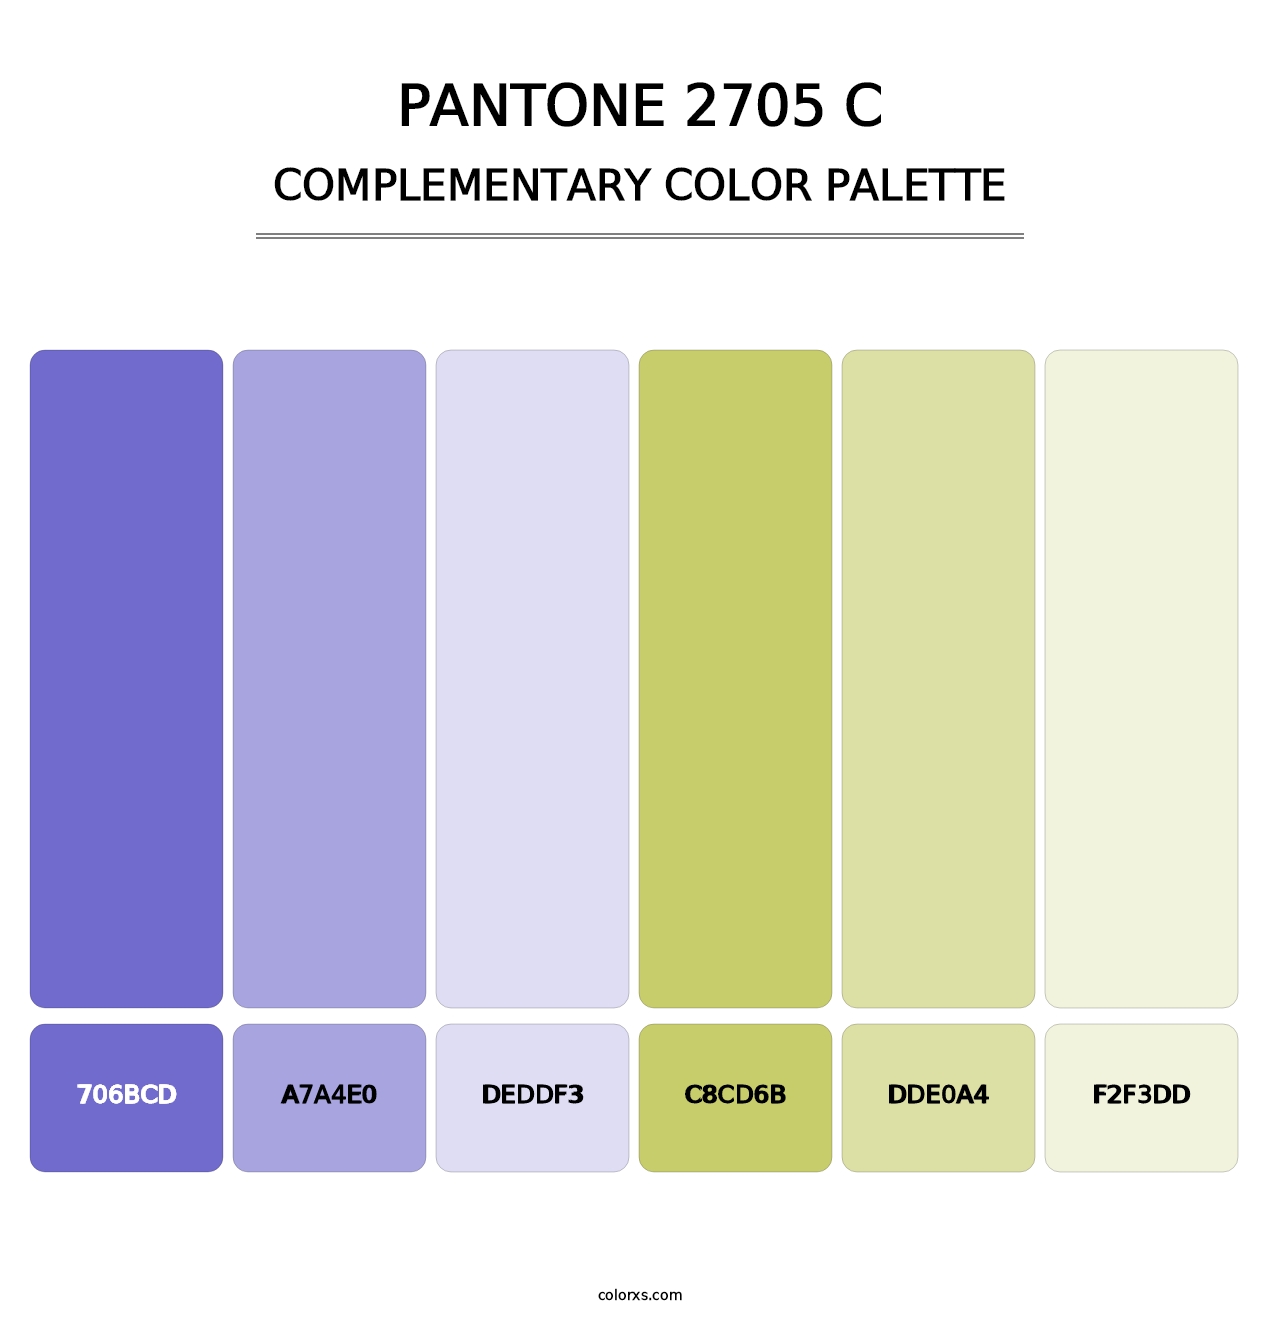 PANTONE 2705 C - Complementary Color Palette